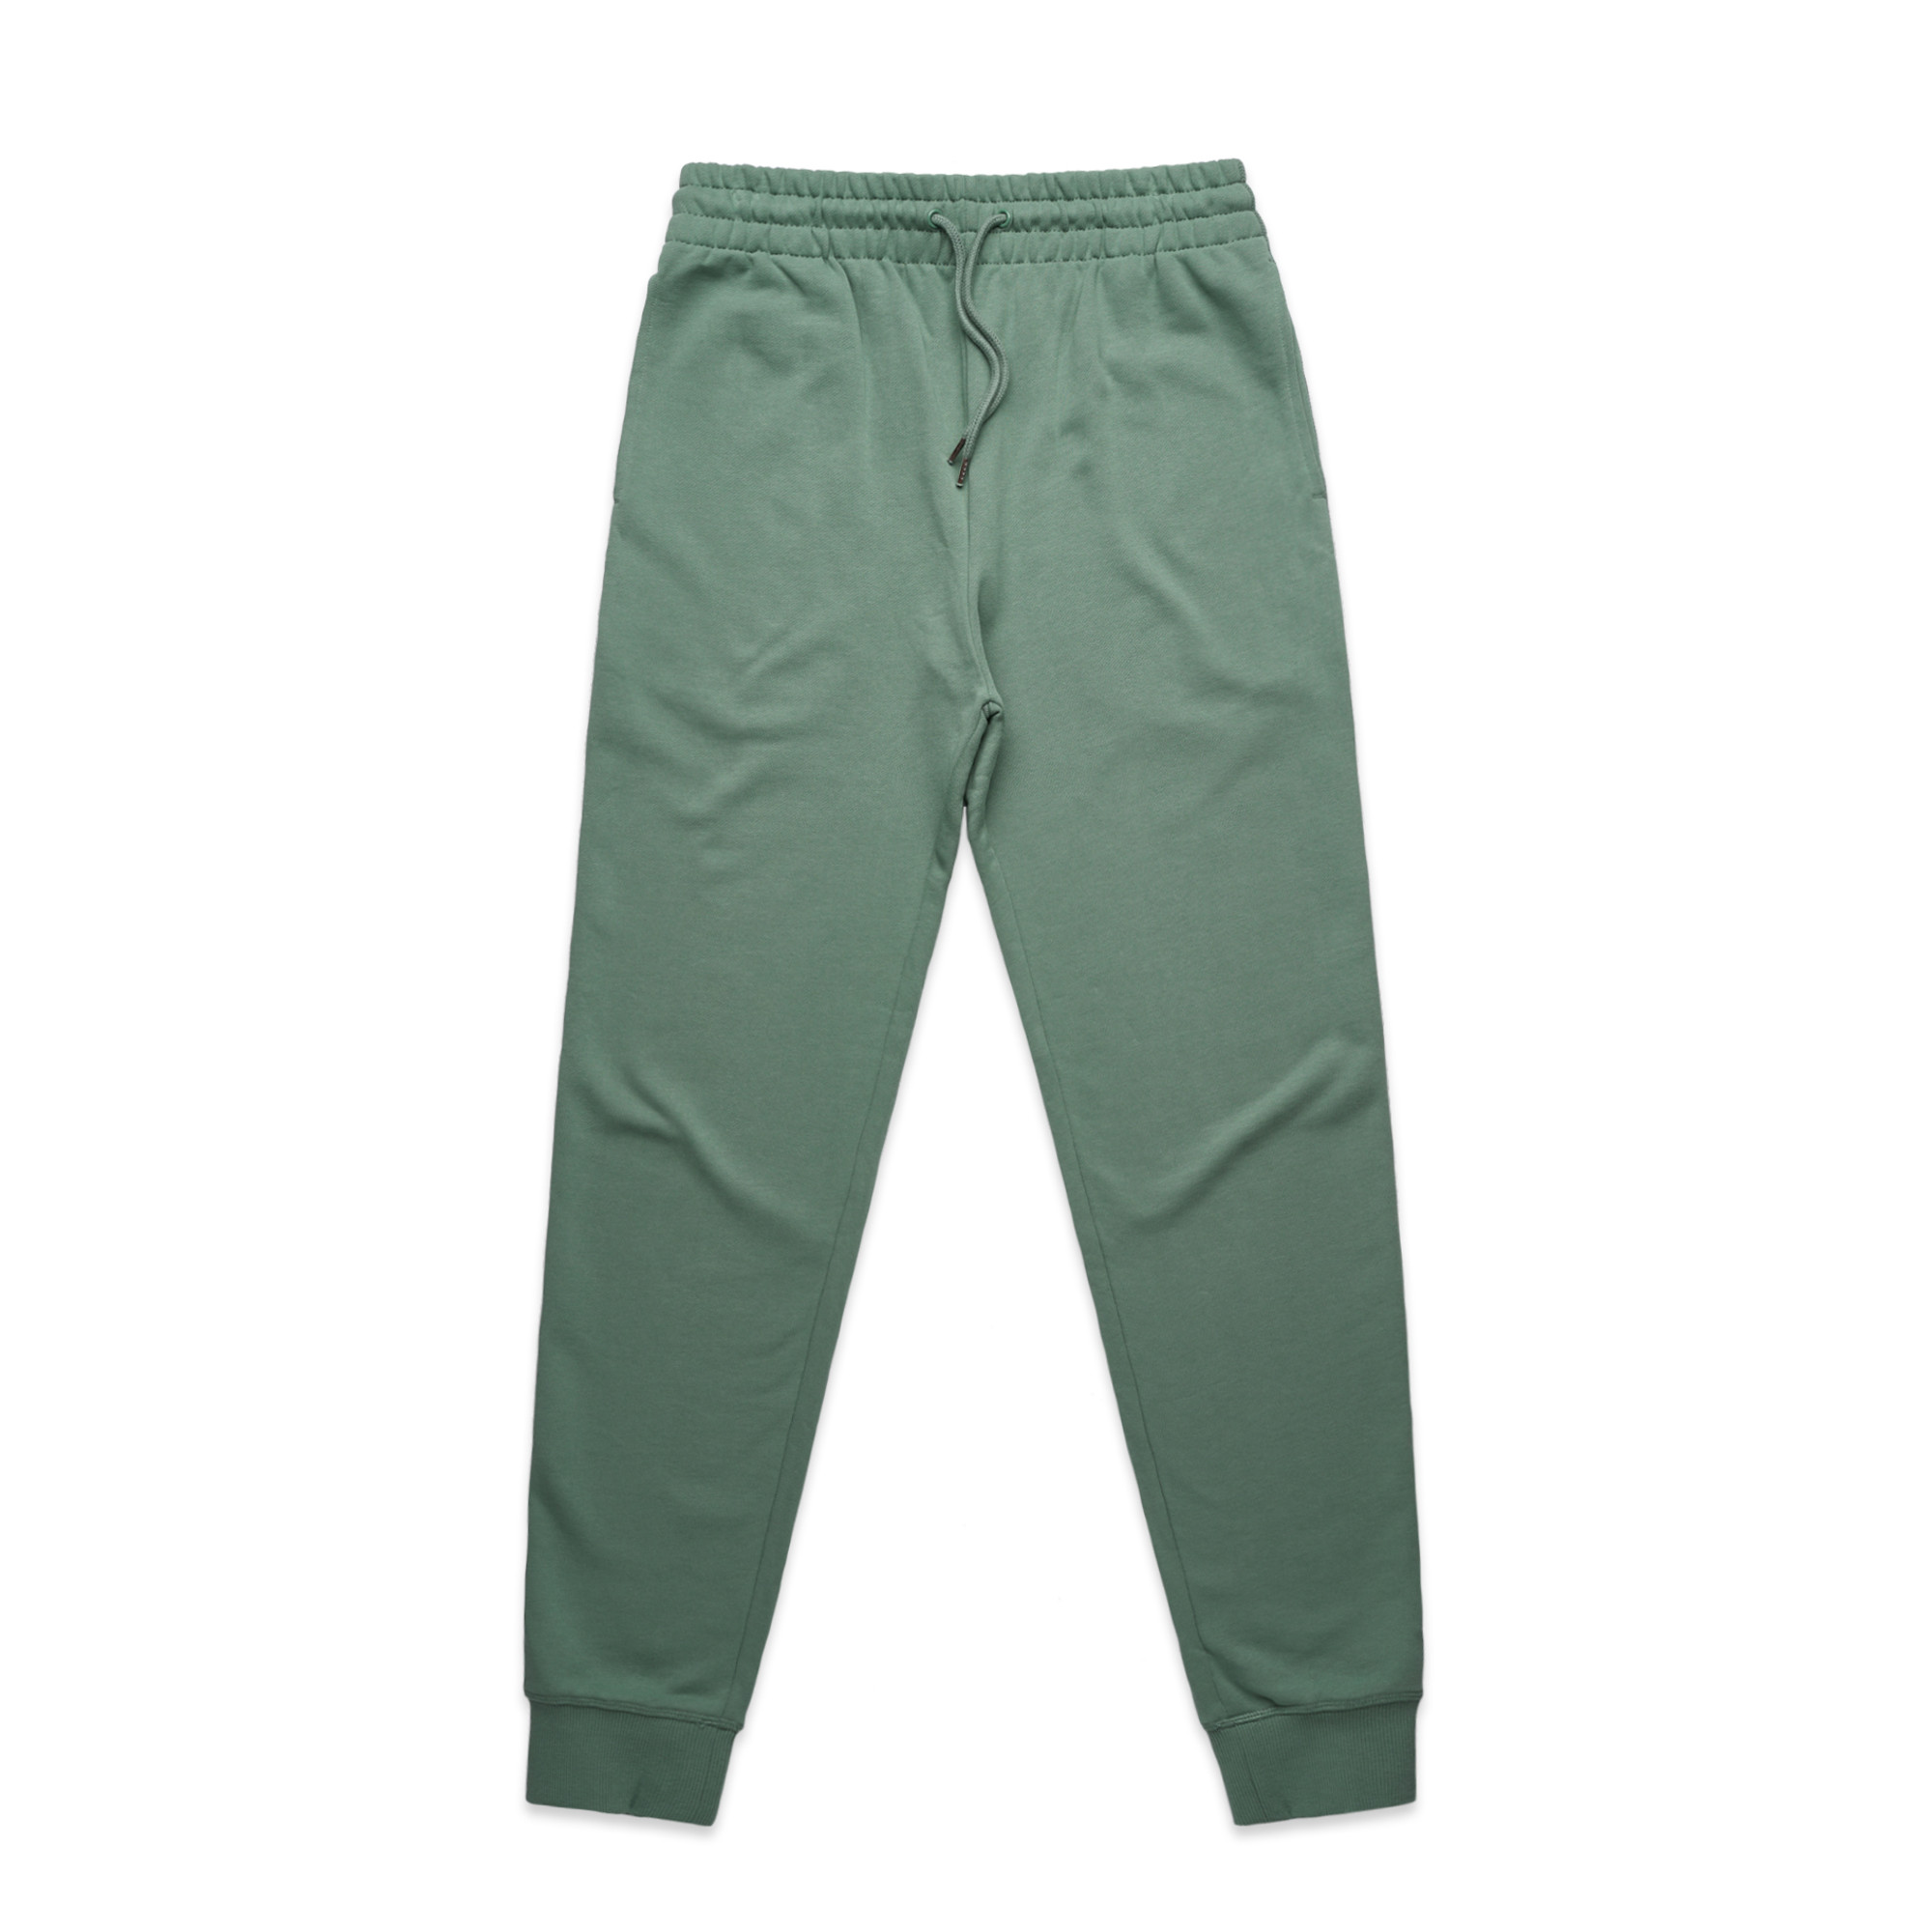 Wo's Premium Track Pants - 4920S - AS Colour NZ